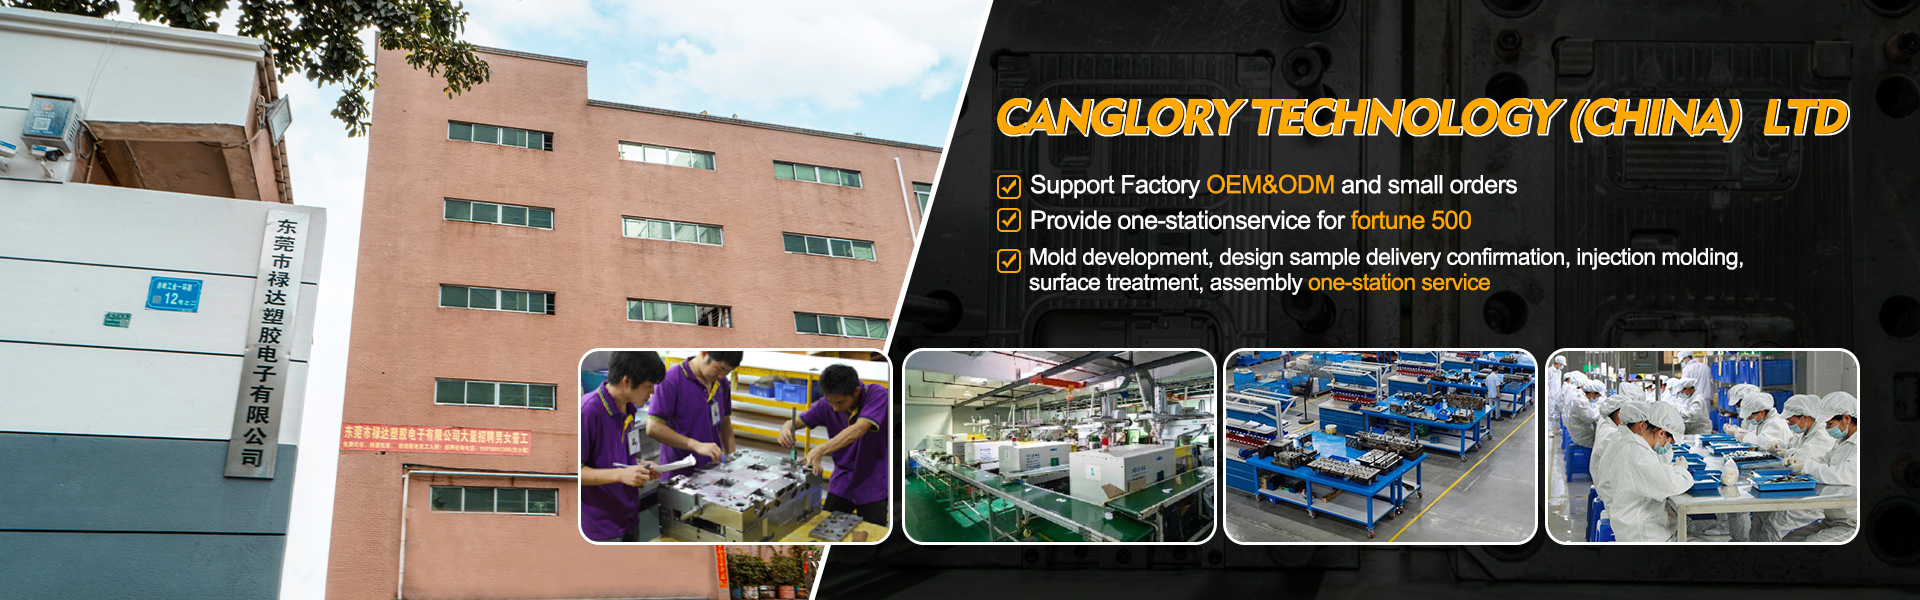 Hjem - Støbning, injektion, originalt udstyrsproducent|Canglory Technology (China) Ltd